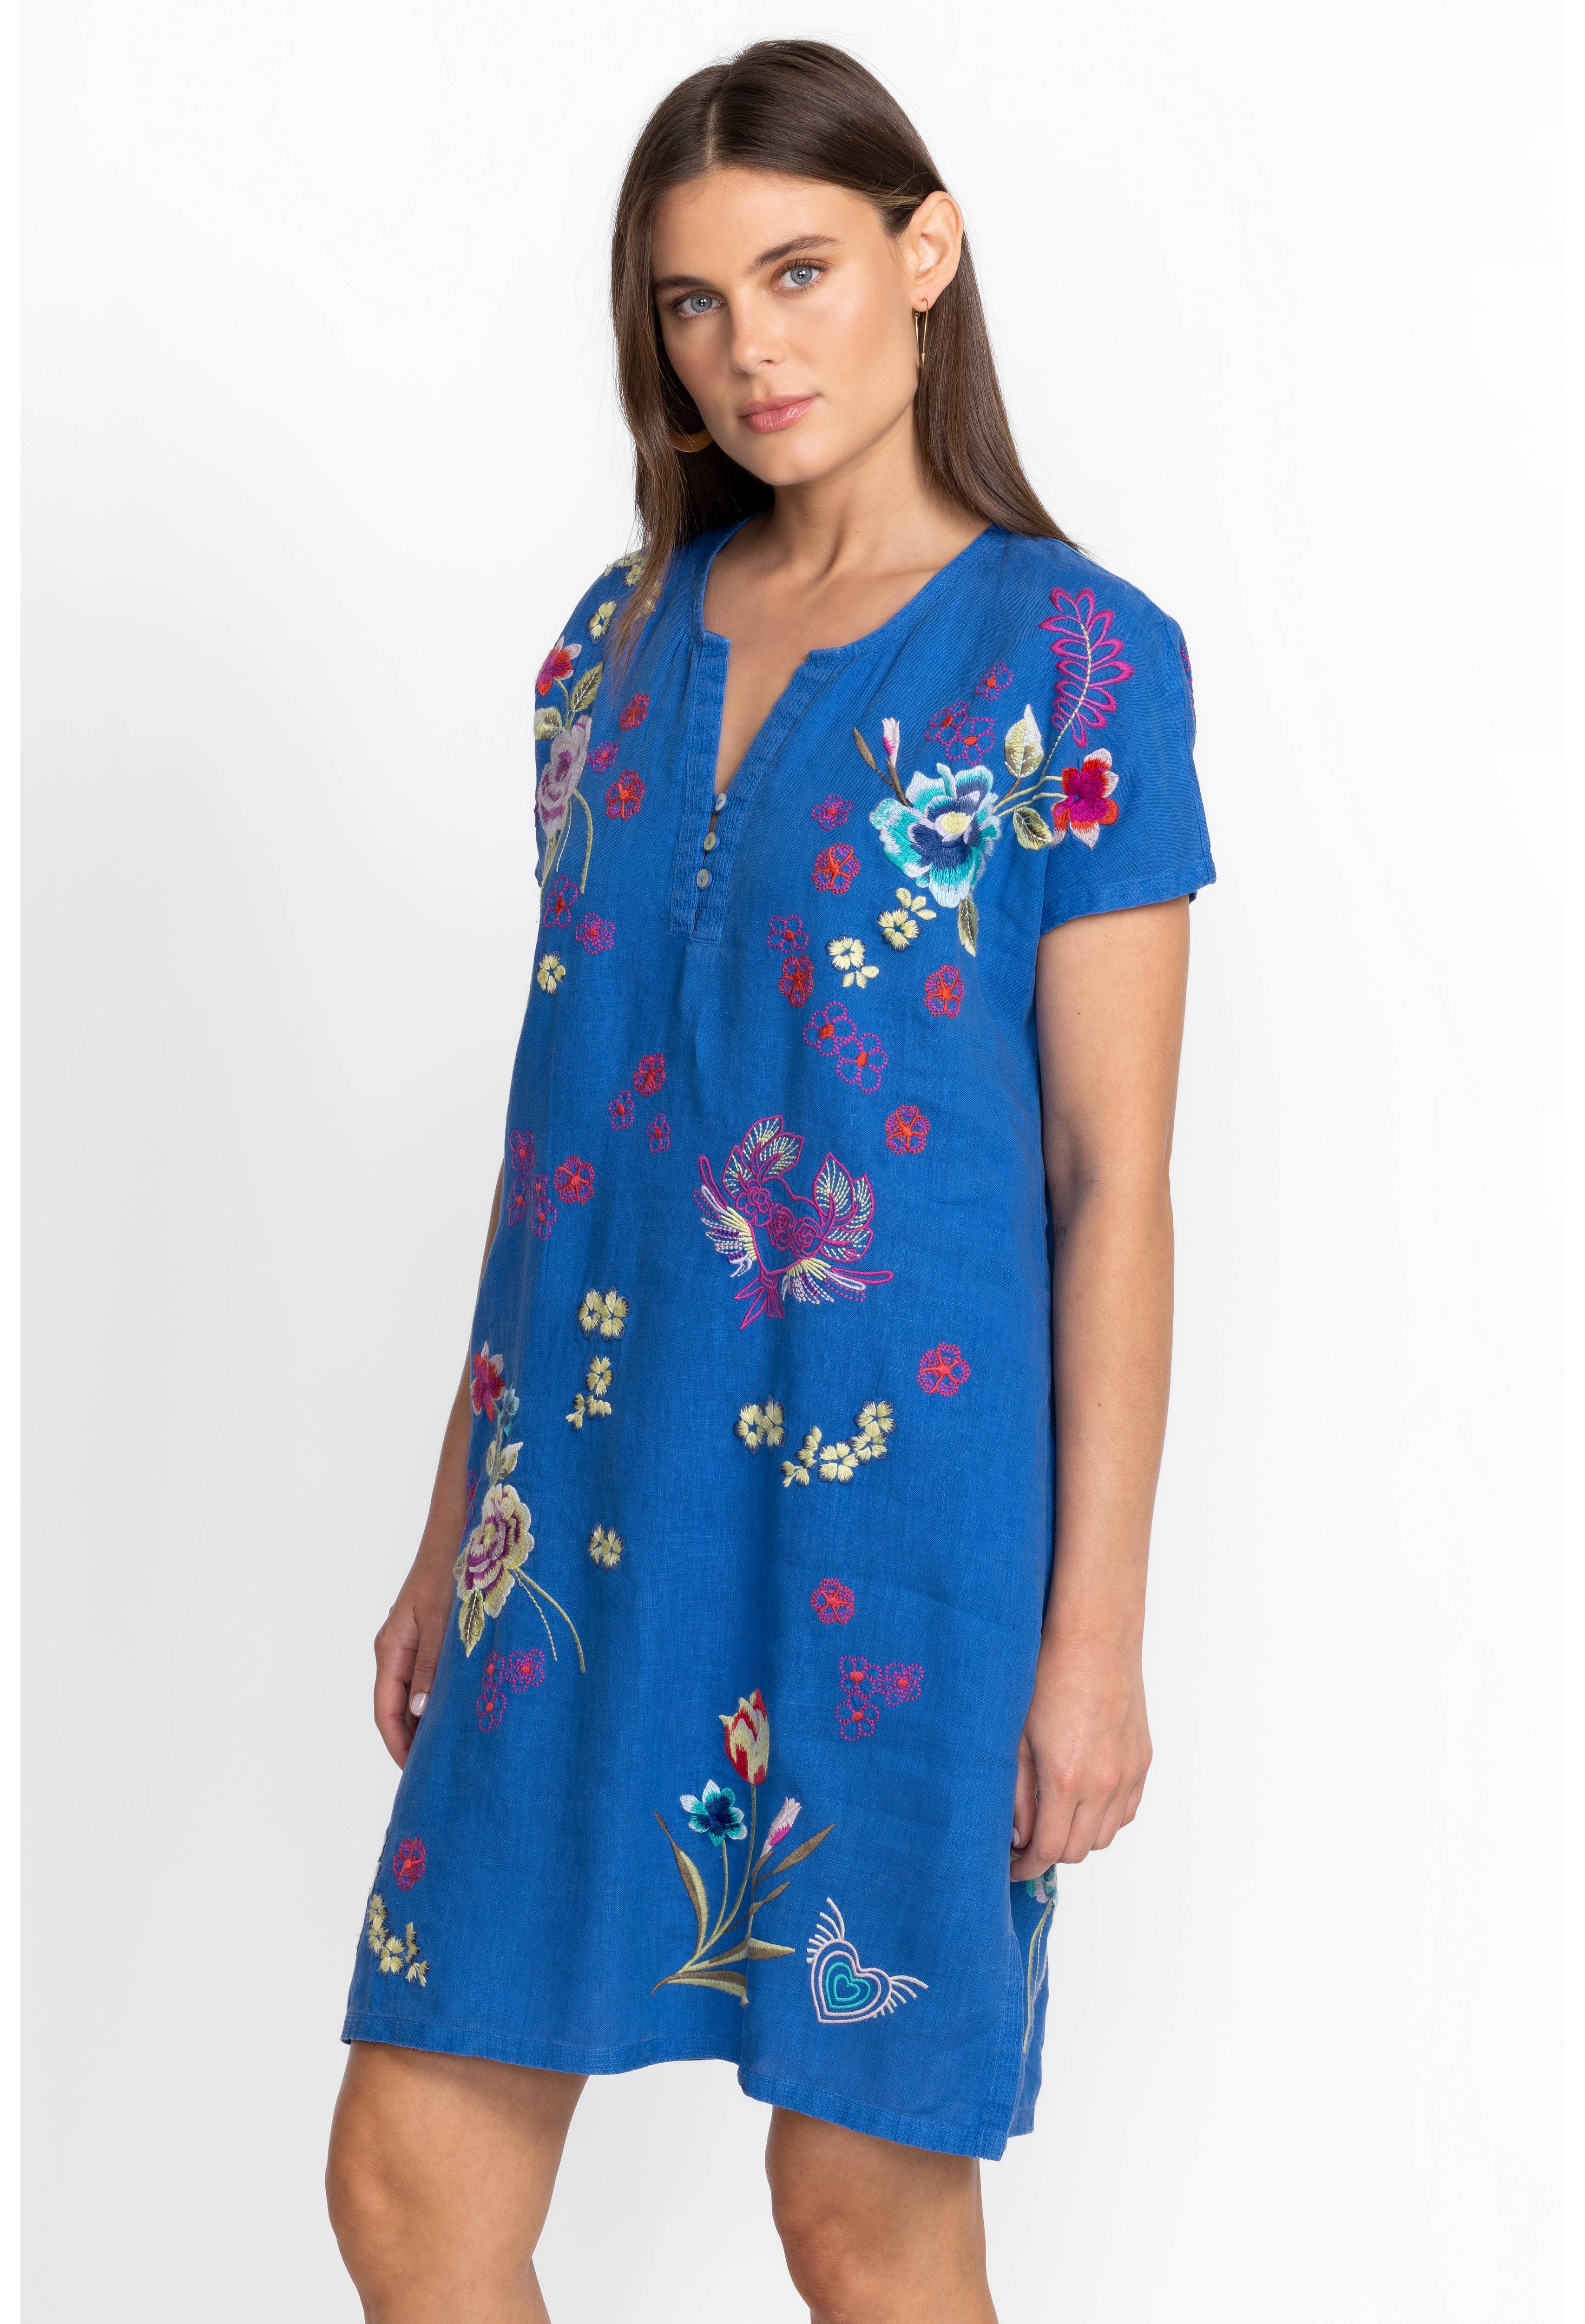 Jessi Button Front Linen Dress, , large image number 2